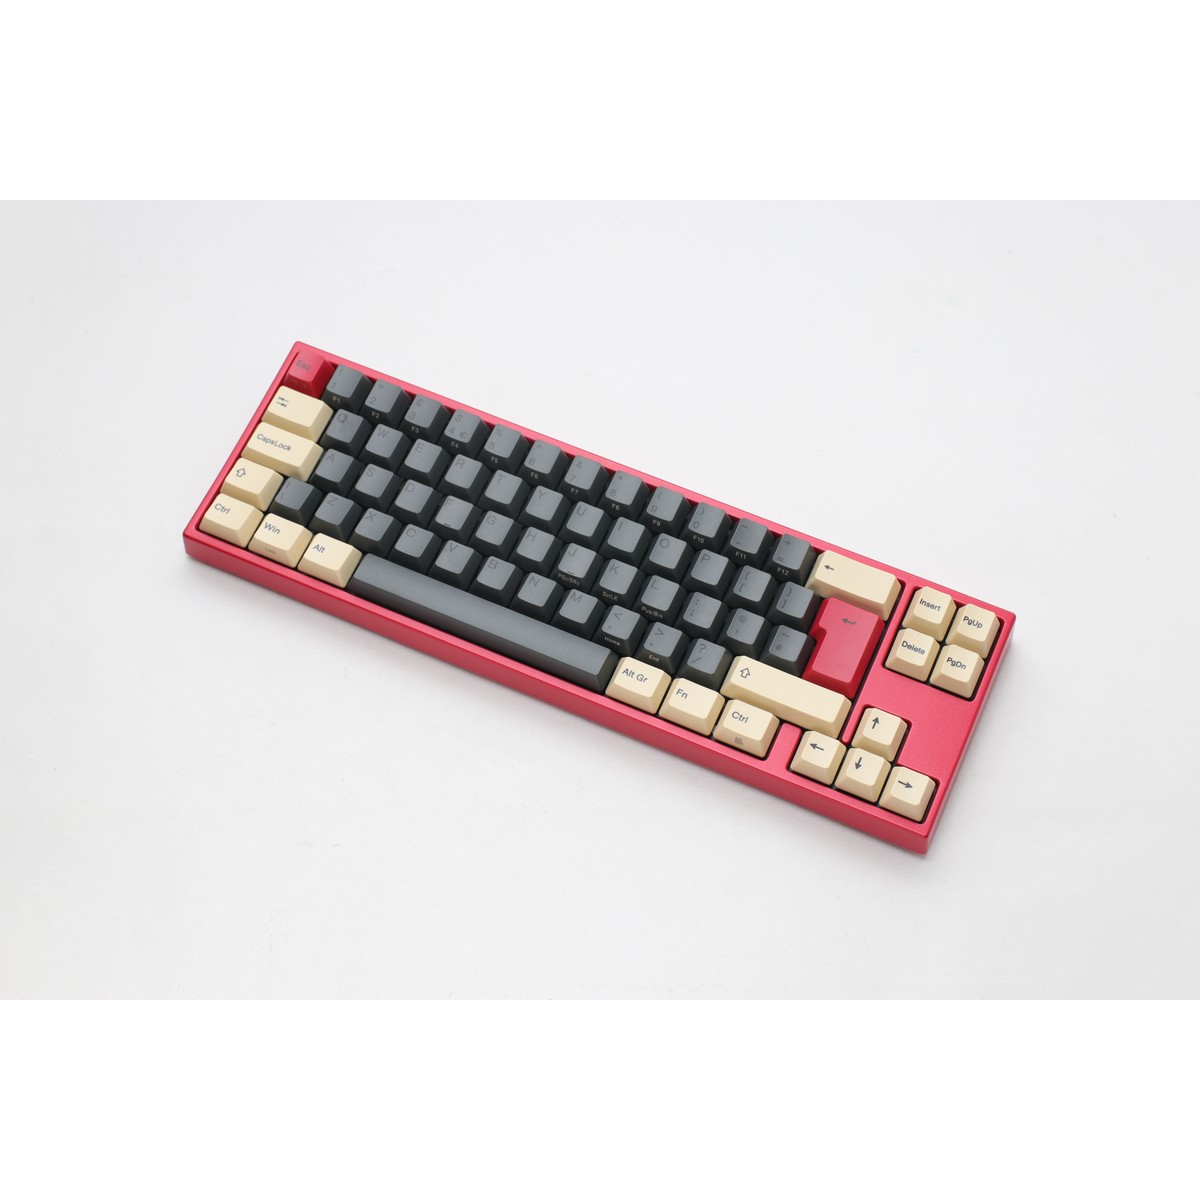 Ducky - Ducky x Varmilo MIYA 69 Pro Knight Mechanical Gaming Keyboard Cherry MX Blue White Backlit - Red/Grey/Cream